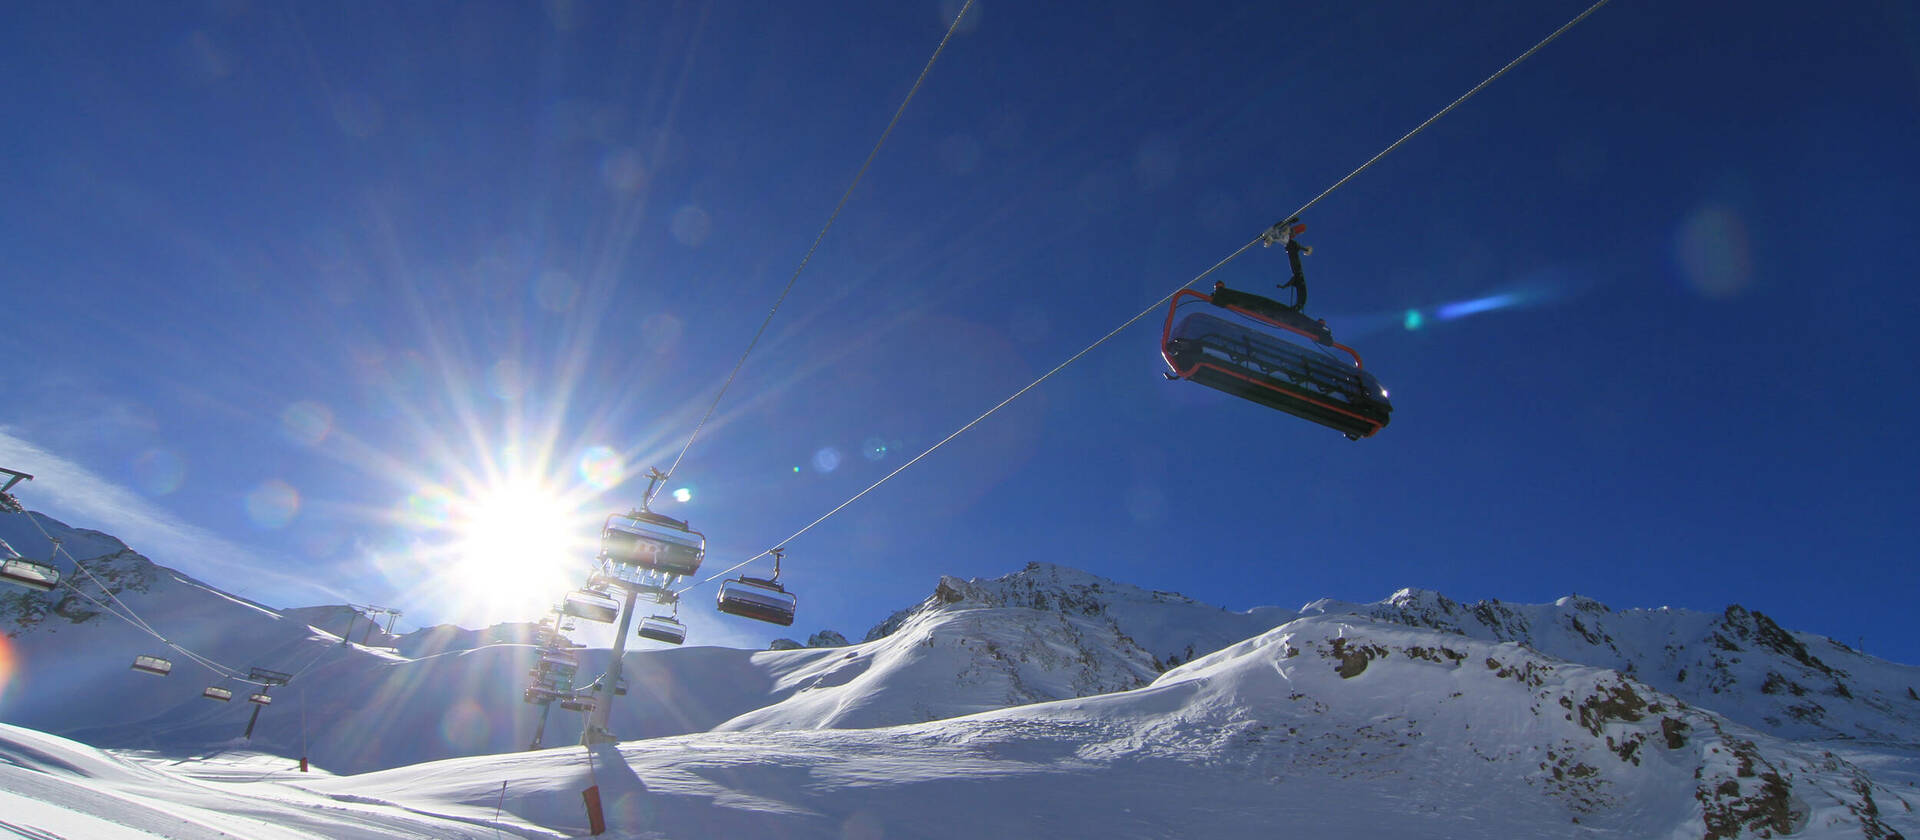 Silvretta Arena Ischgl one of the most beautiful ski resorts in Europe 